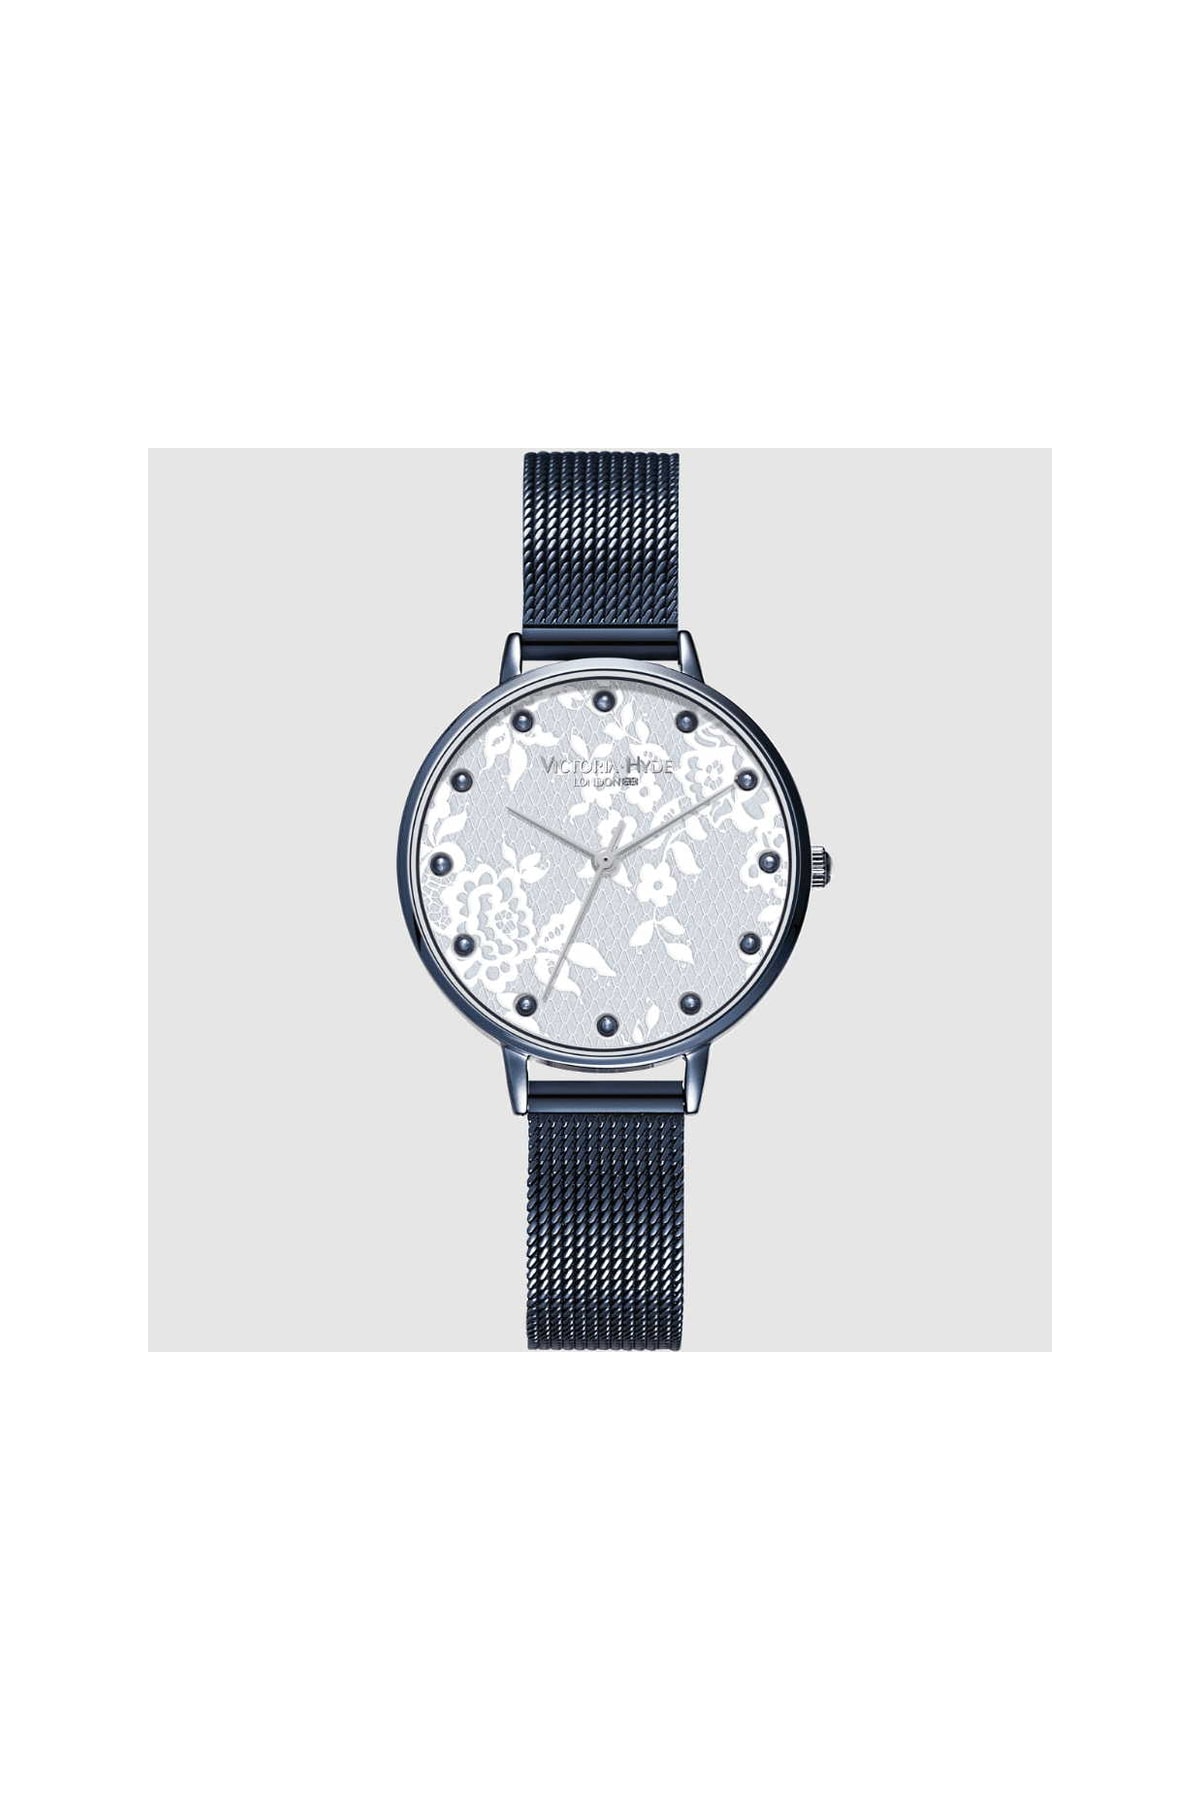 Victoria Hyde Armbanduhr Blau Unifarben Fast ausverkauft